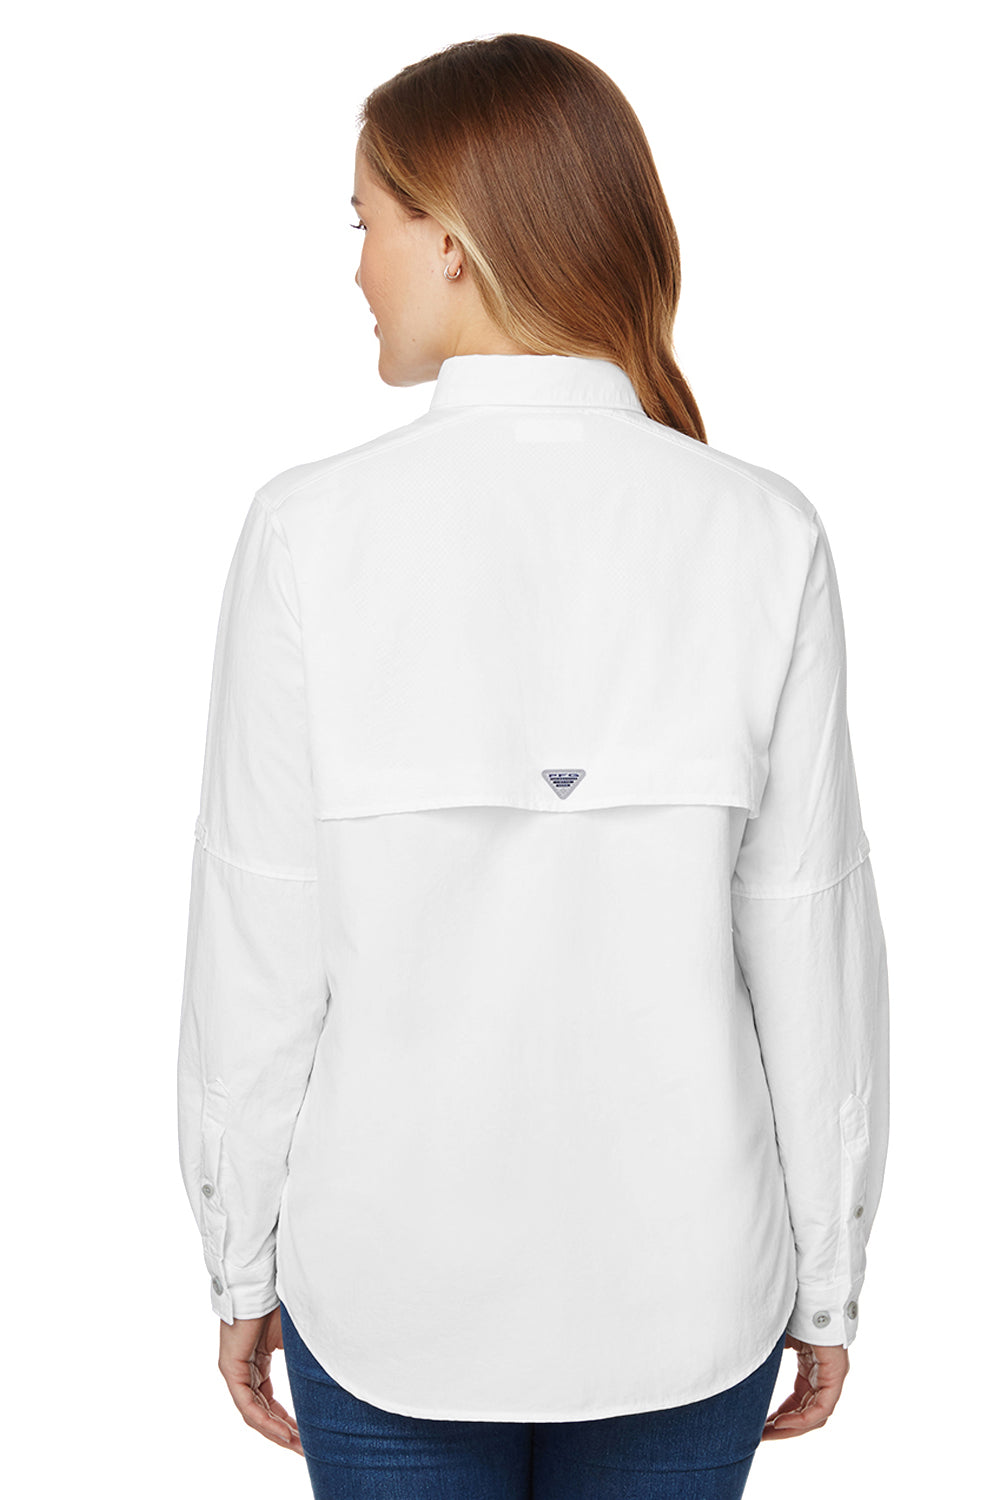 Columbia 7314 Womens Bahama Moisture Wicking Long Sleeve Button Down Shirt w/ Double Pockets White Back